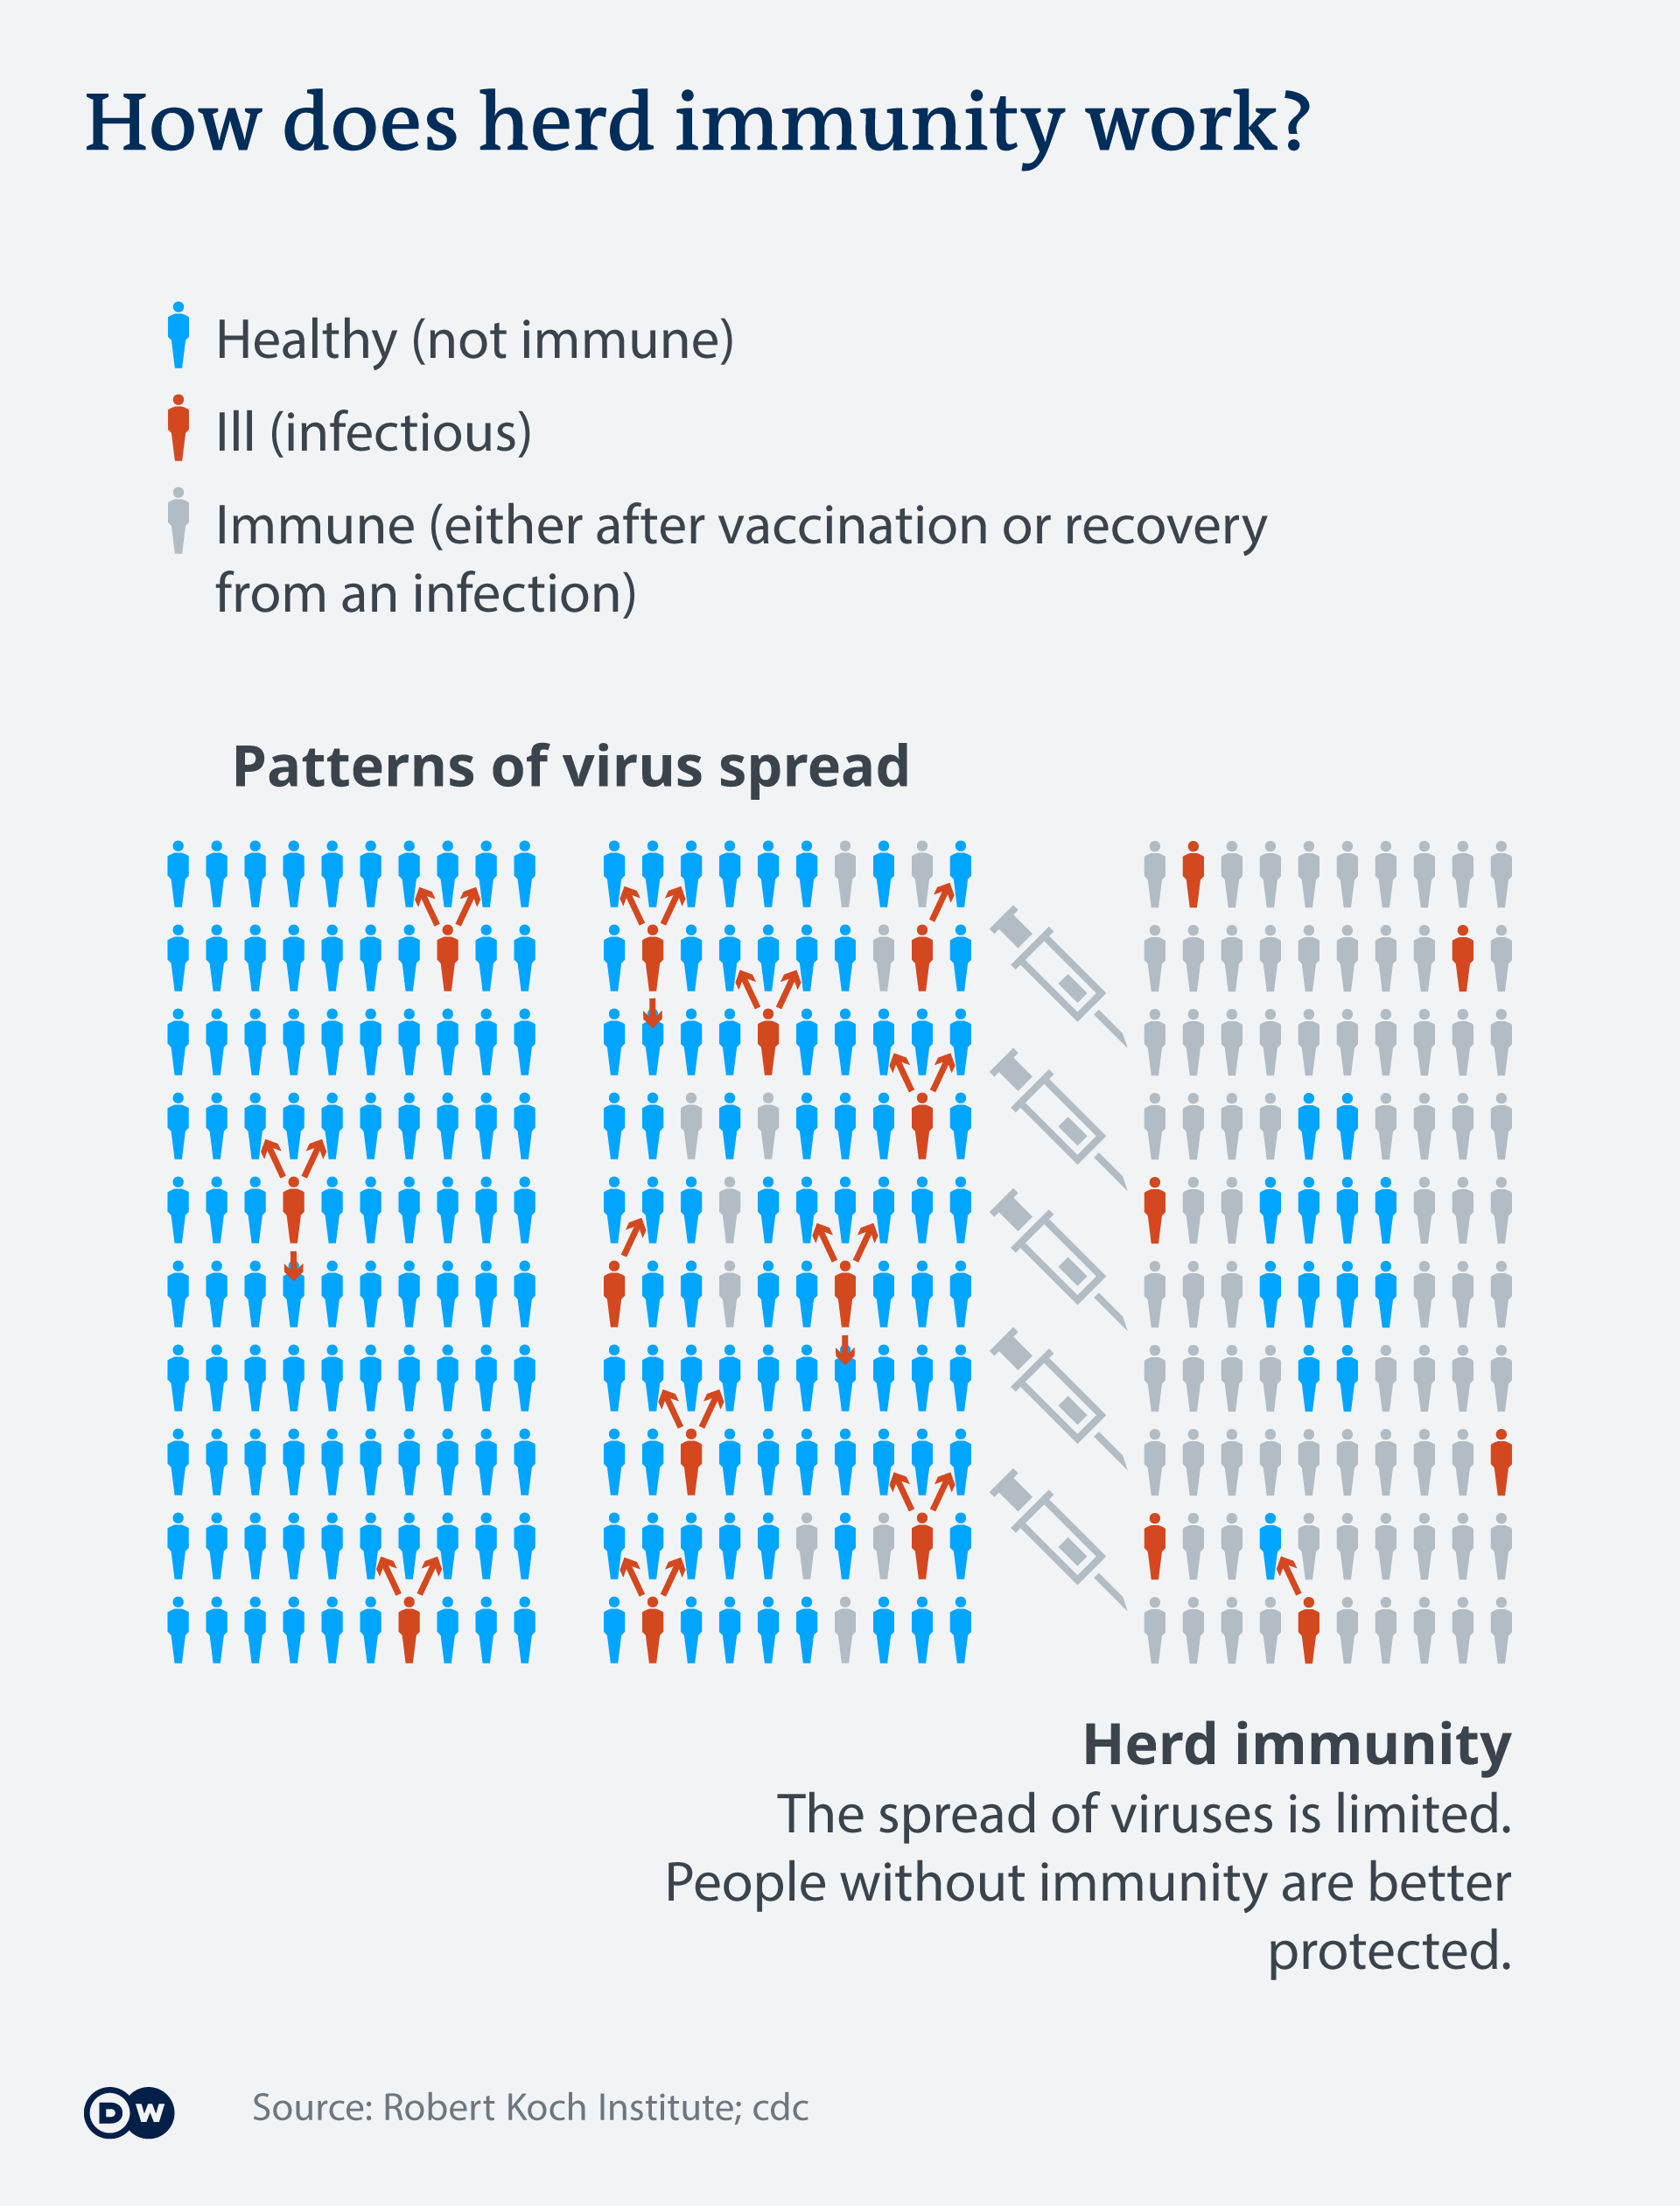 How herd immunity works